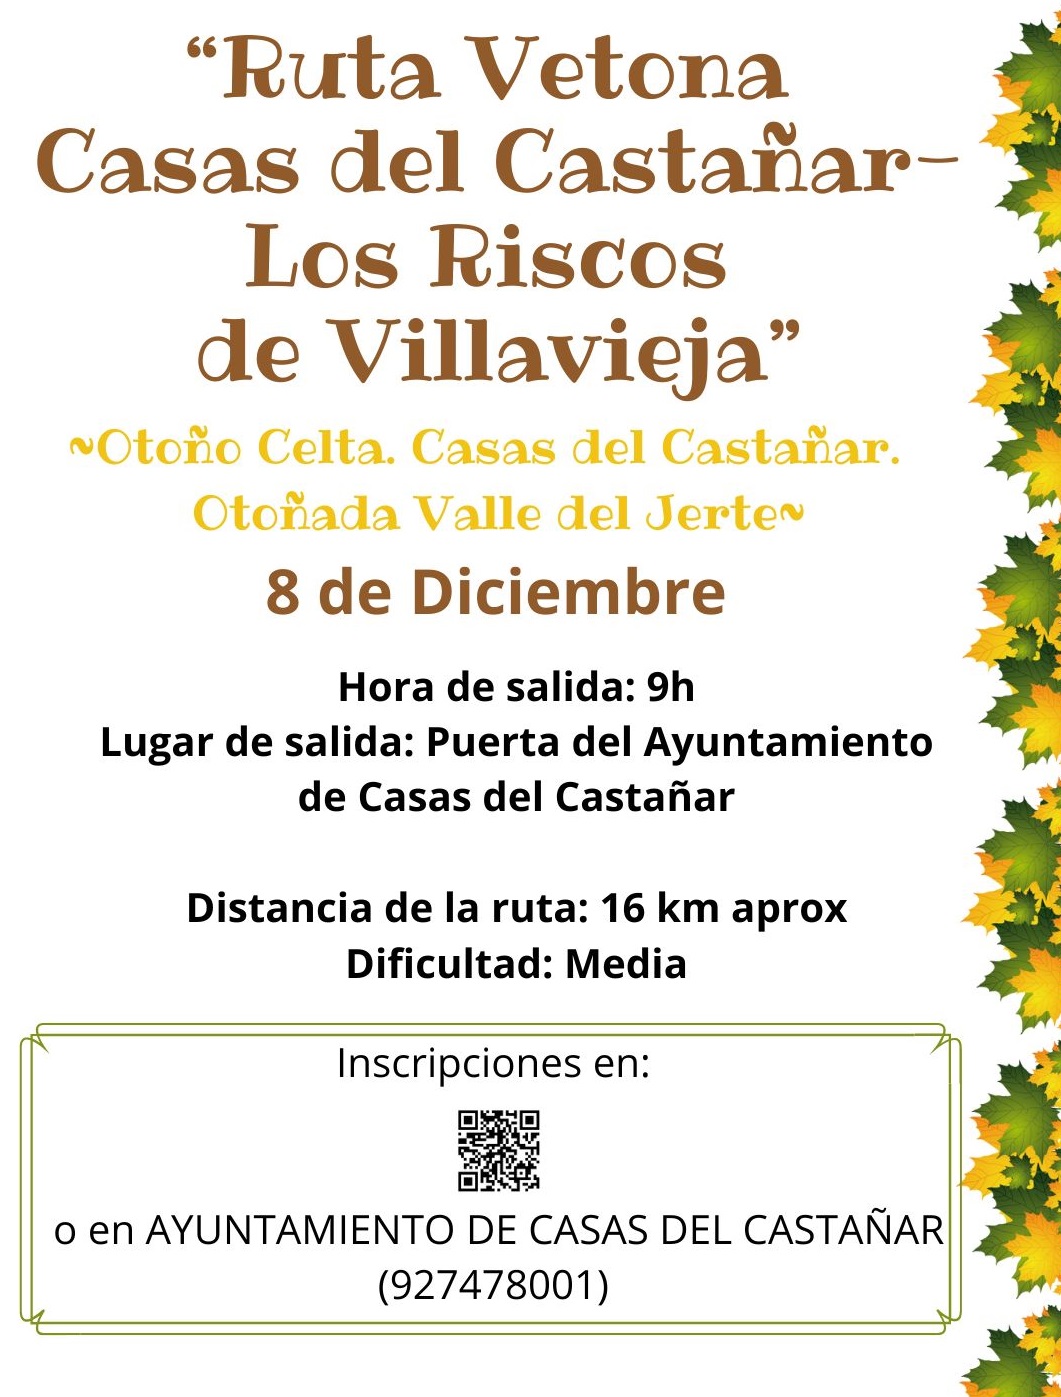 Ruta Vetona Casas del Castañar - Los Riscos de Villavieja